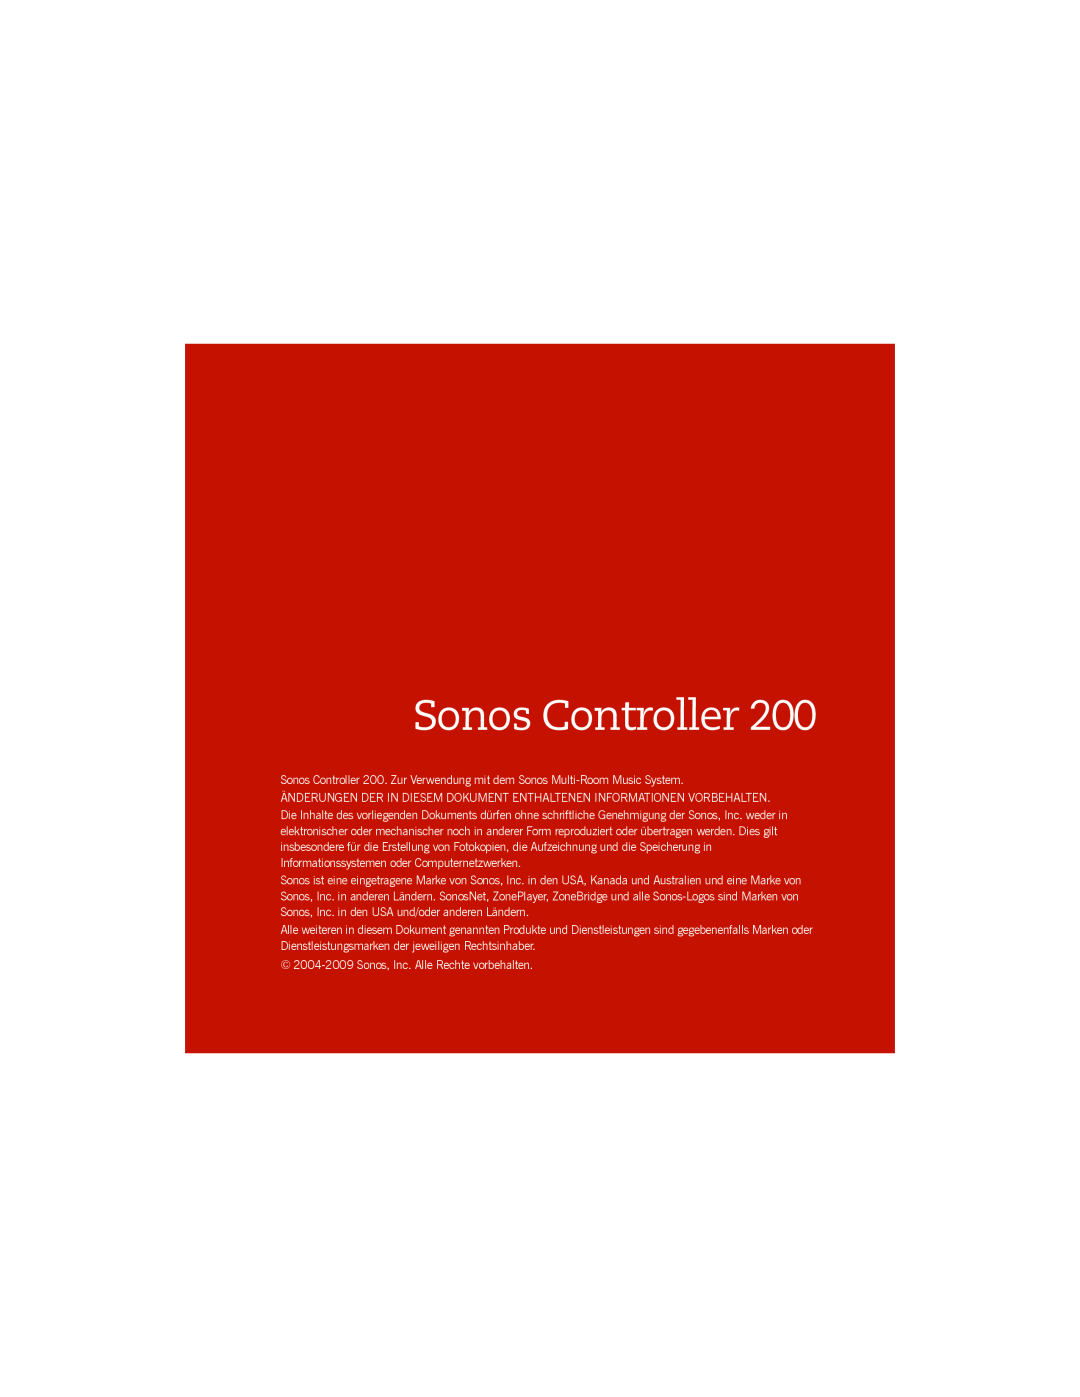 Sonos manual Sonos Controller, 2004-2009Sonos, Inc. Alle Rechte vorbehalten 